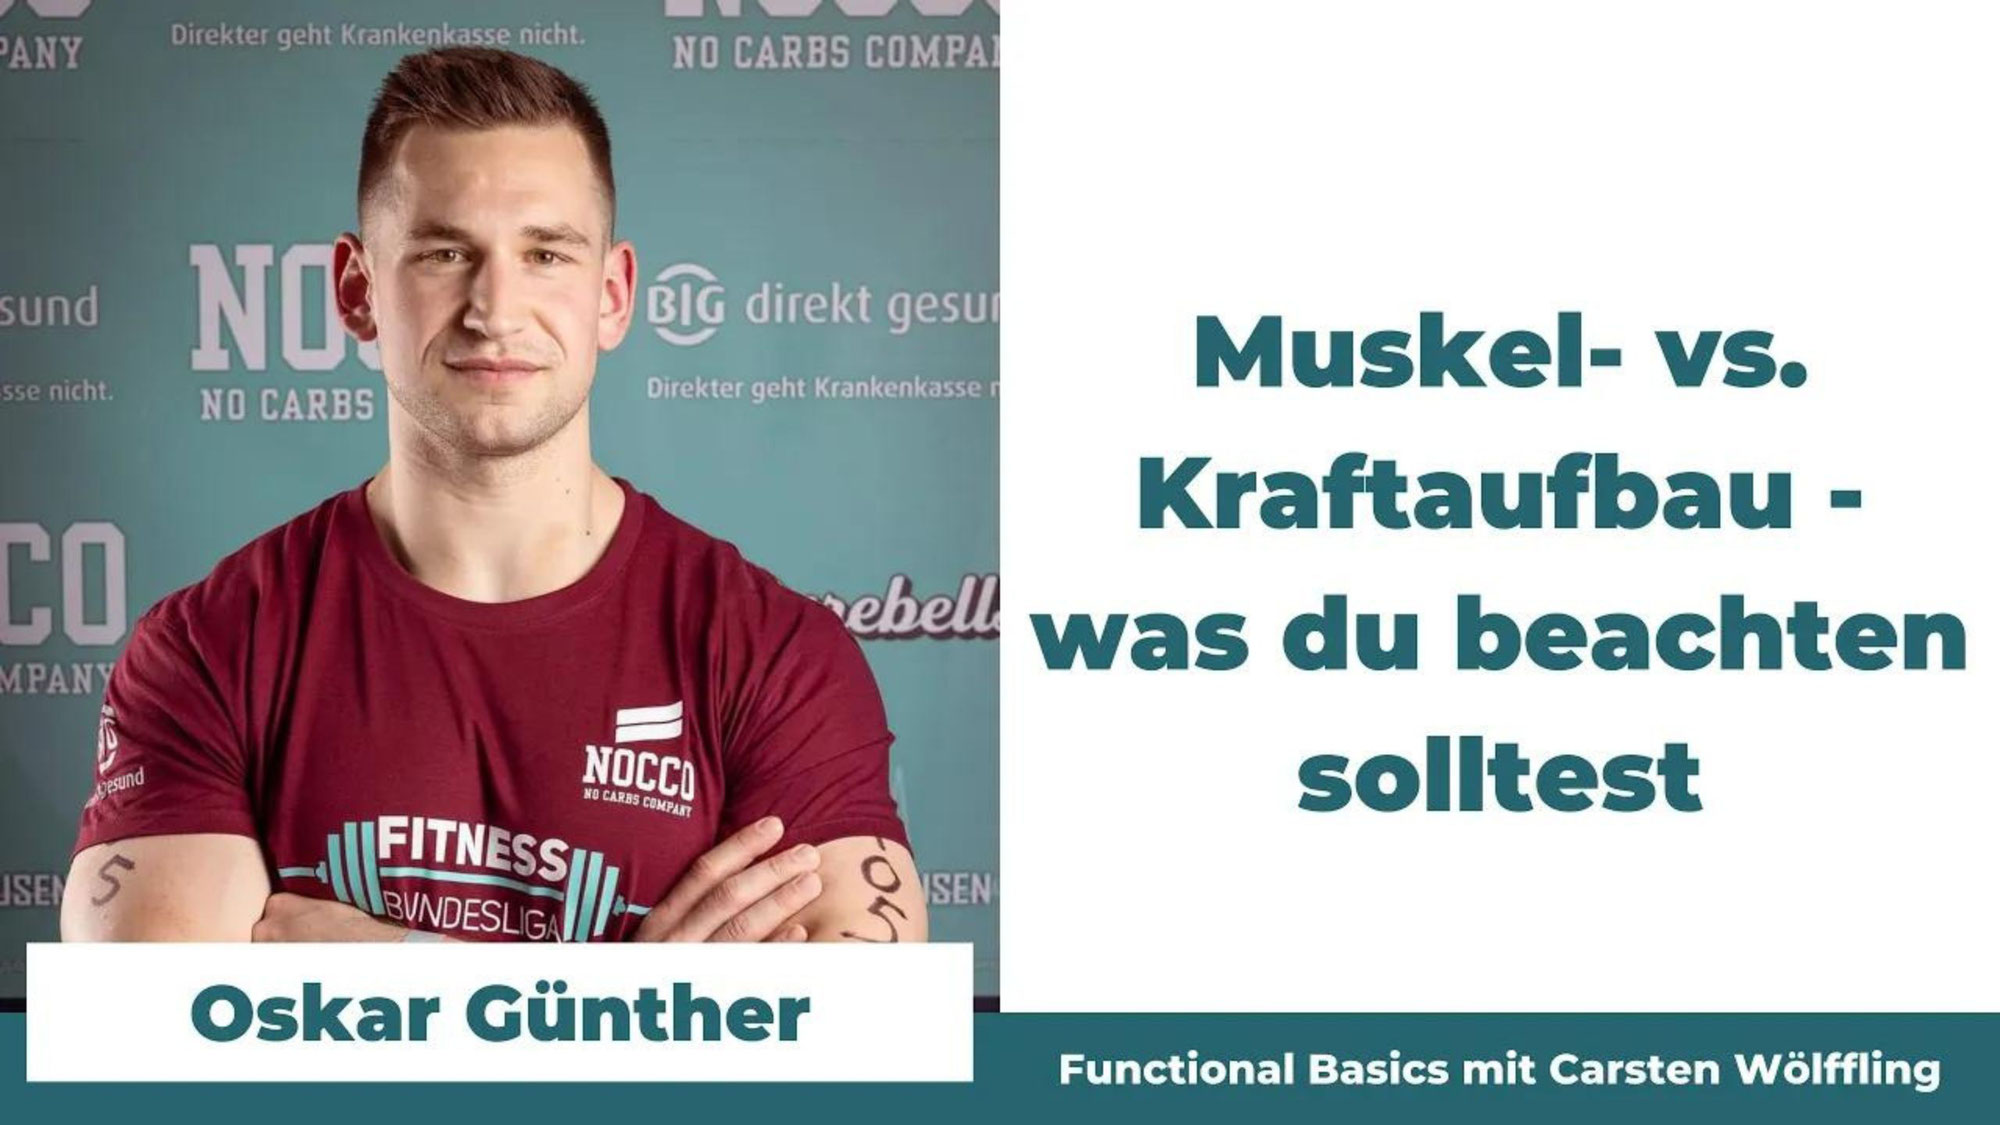 Muskel- vs. Kraftaufbau - was du beachten solltest mit dem Sports & Nutrition Coach Oskar Günther